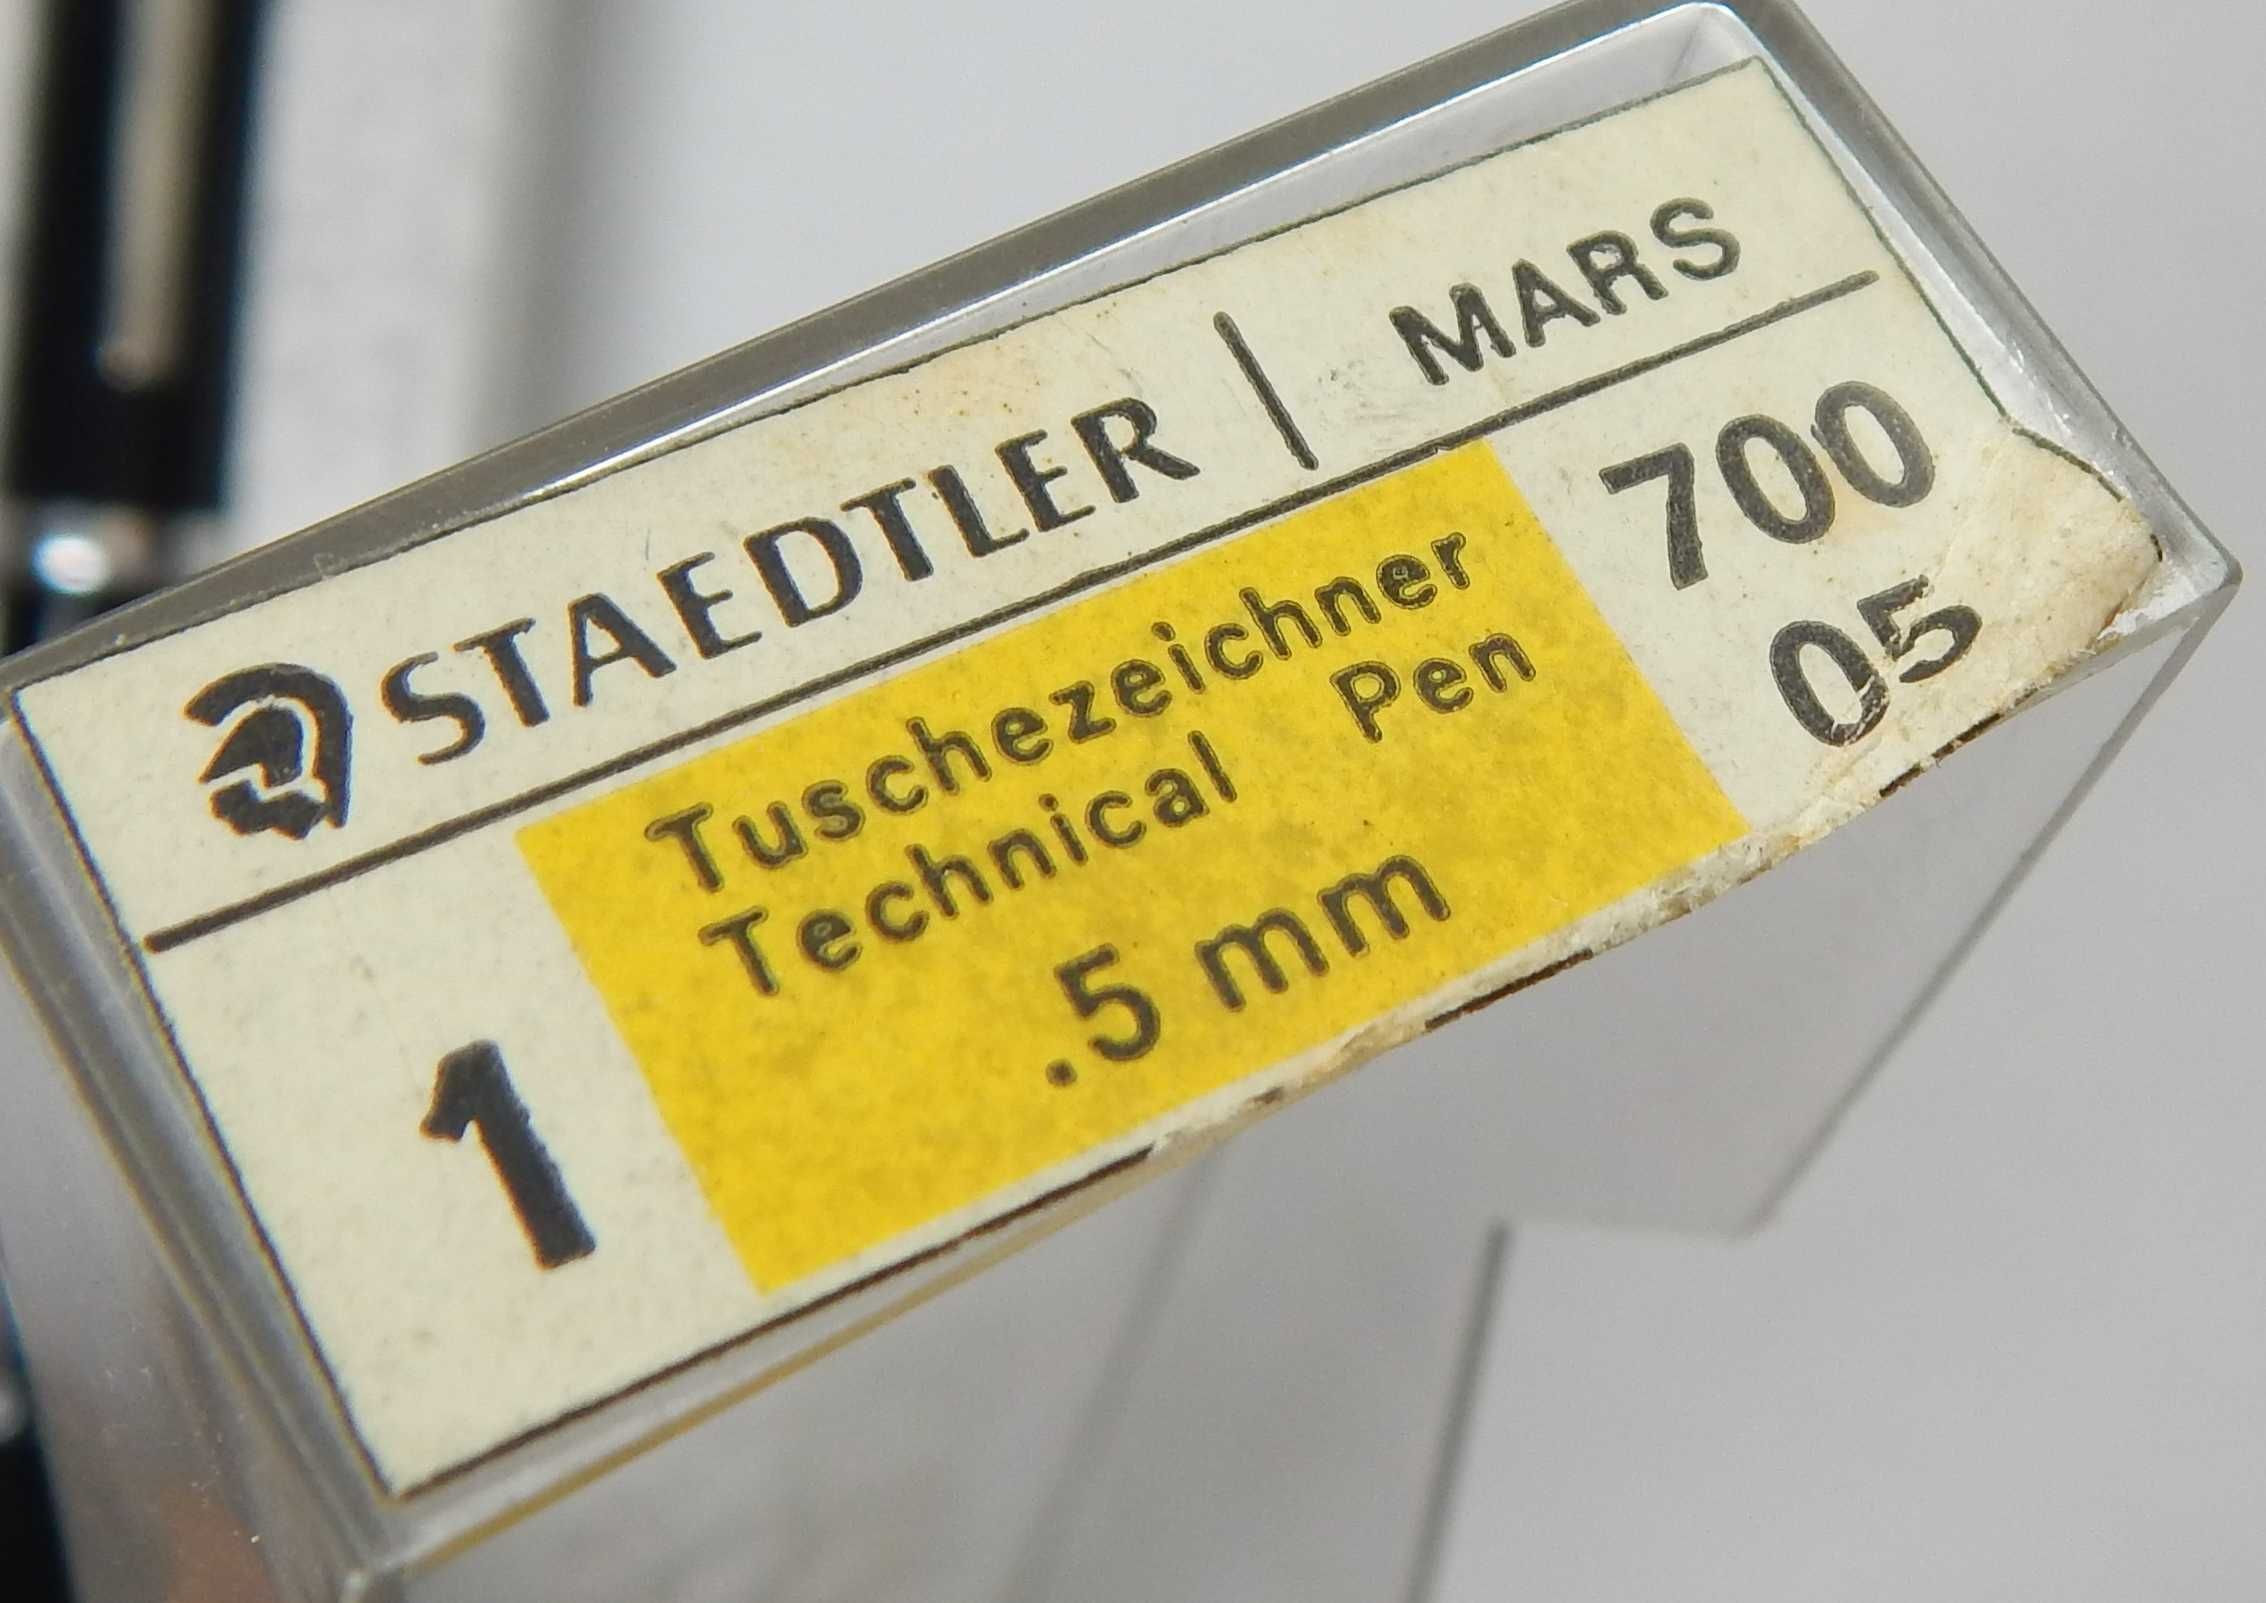 Stilou Tehnic Staedtler Mars 700 0.5 MM, Folosit, In cutia originala